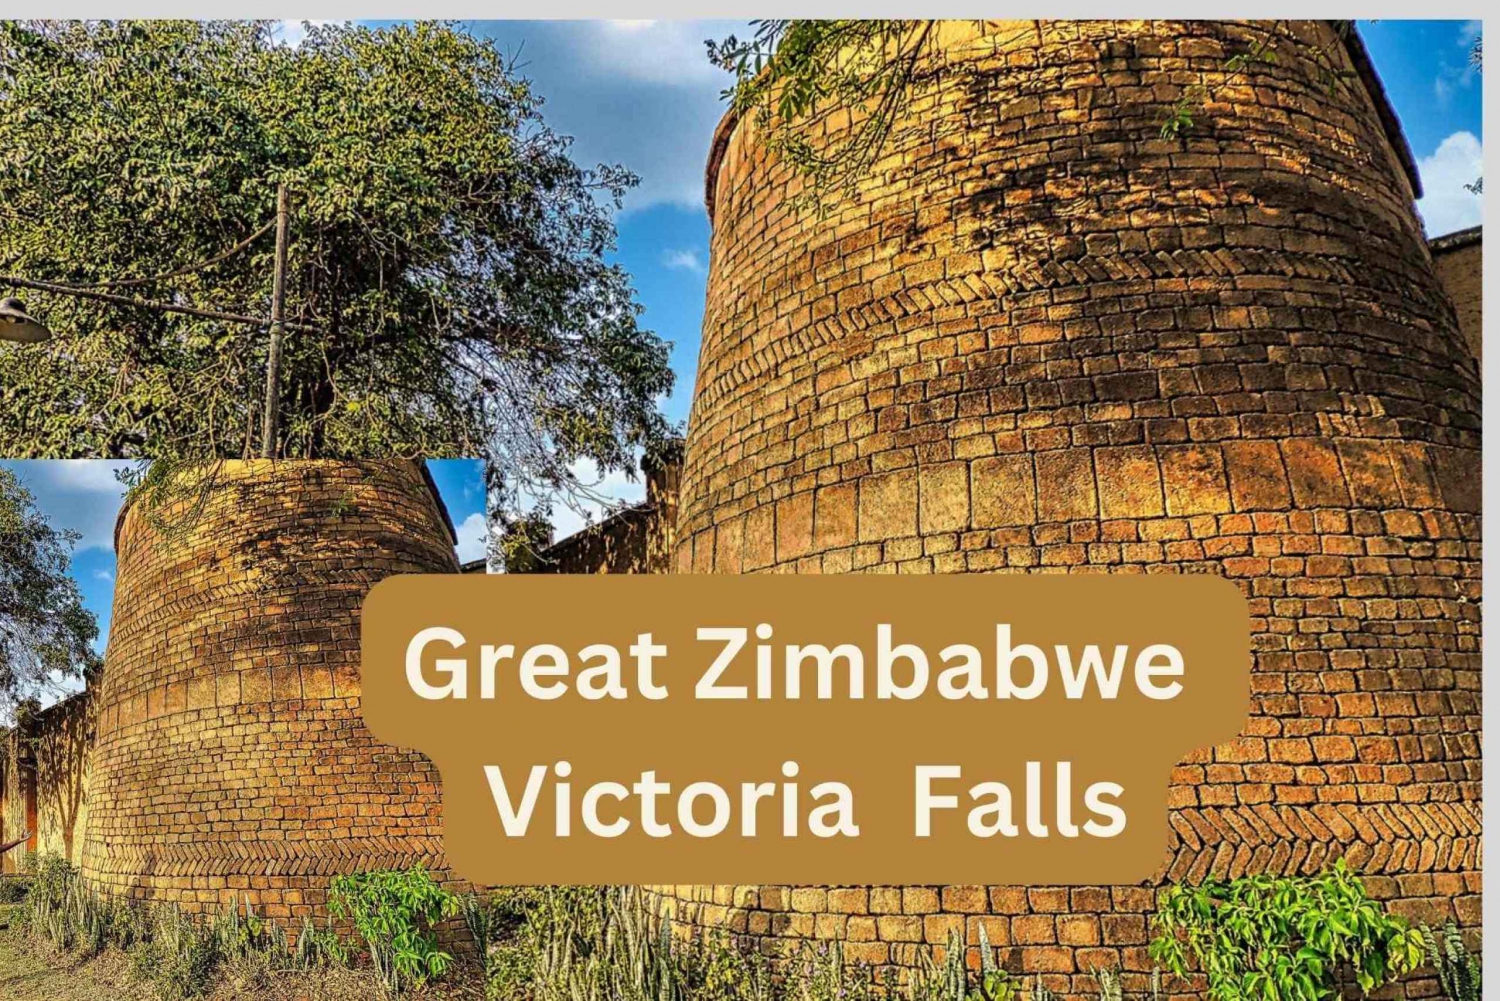 Victoria Falls Town: Guided Town Safari